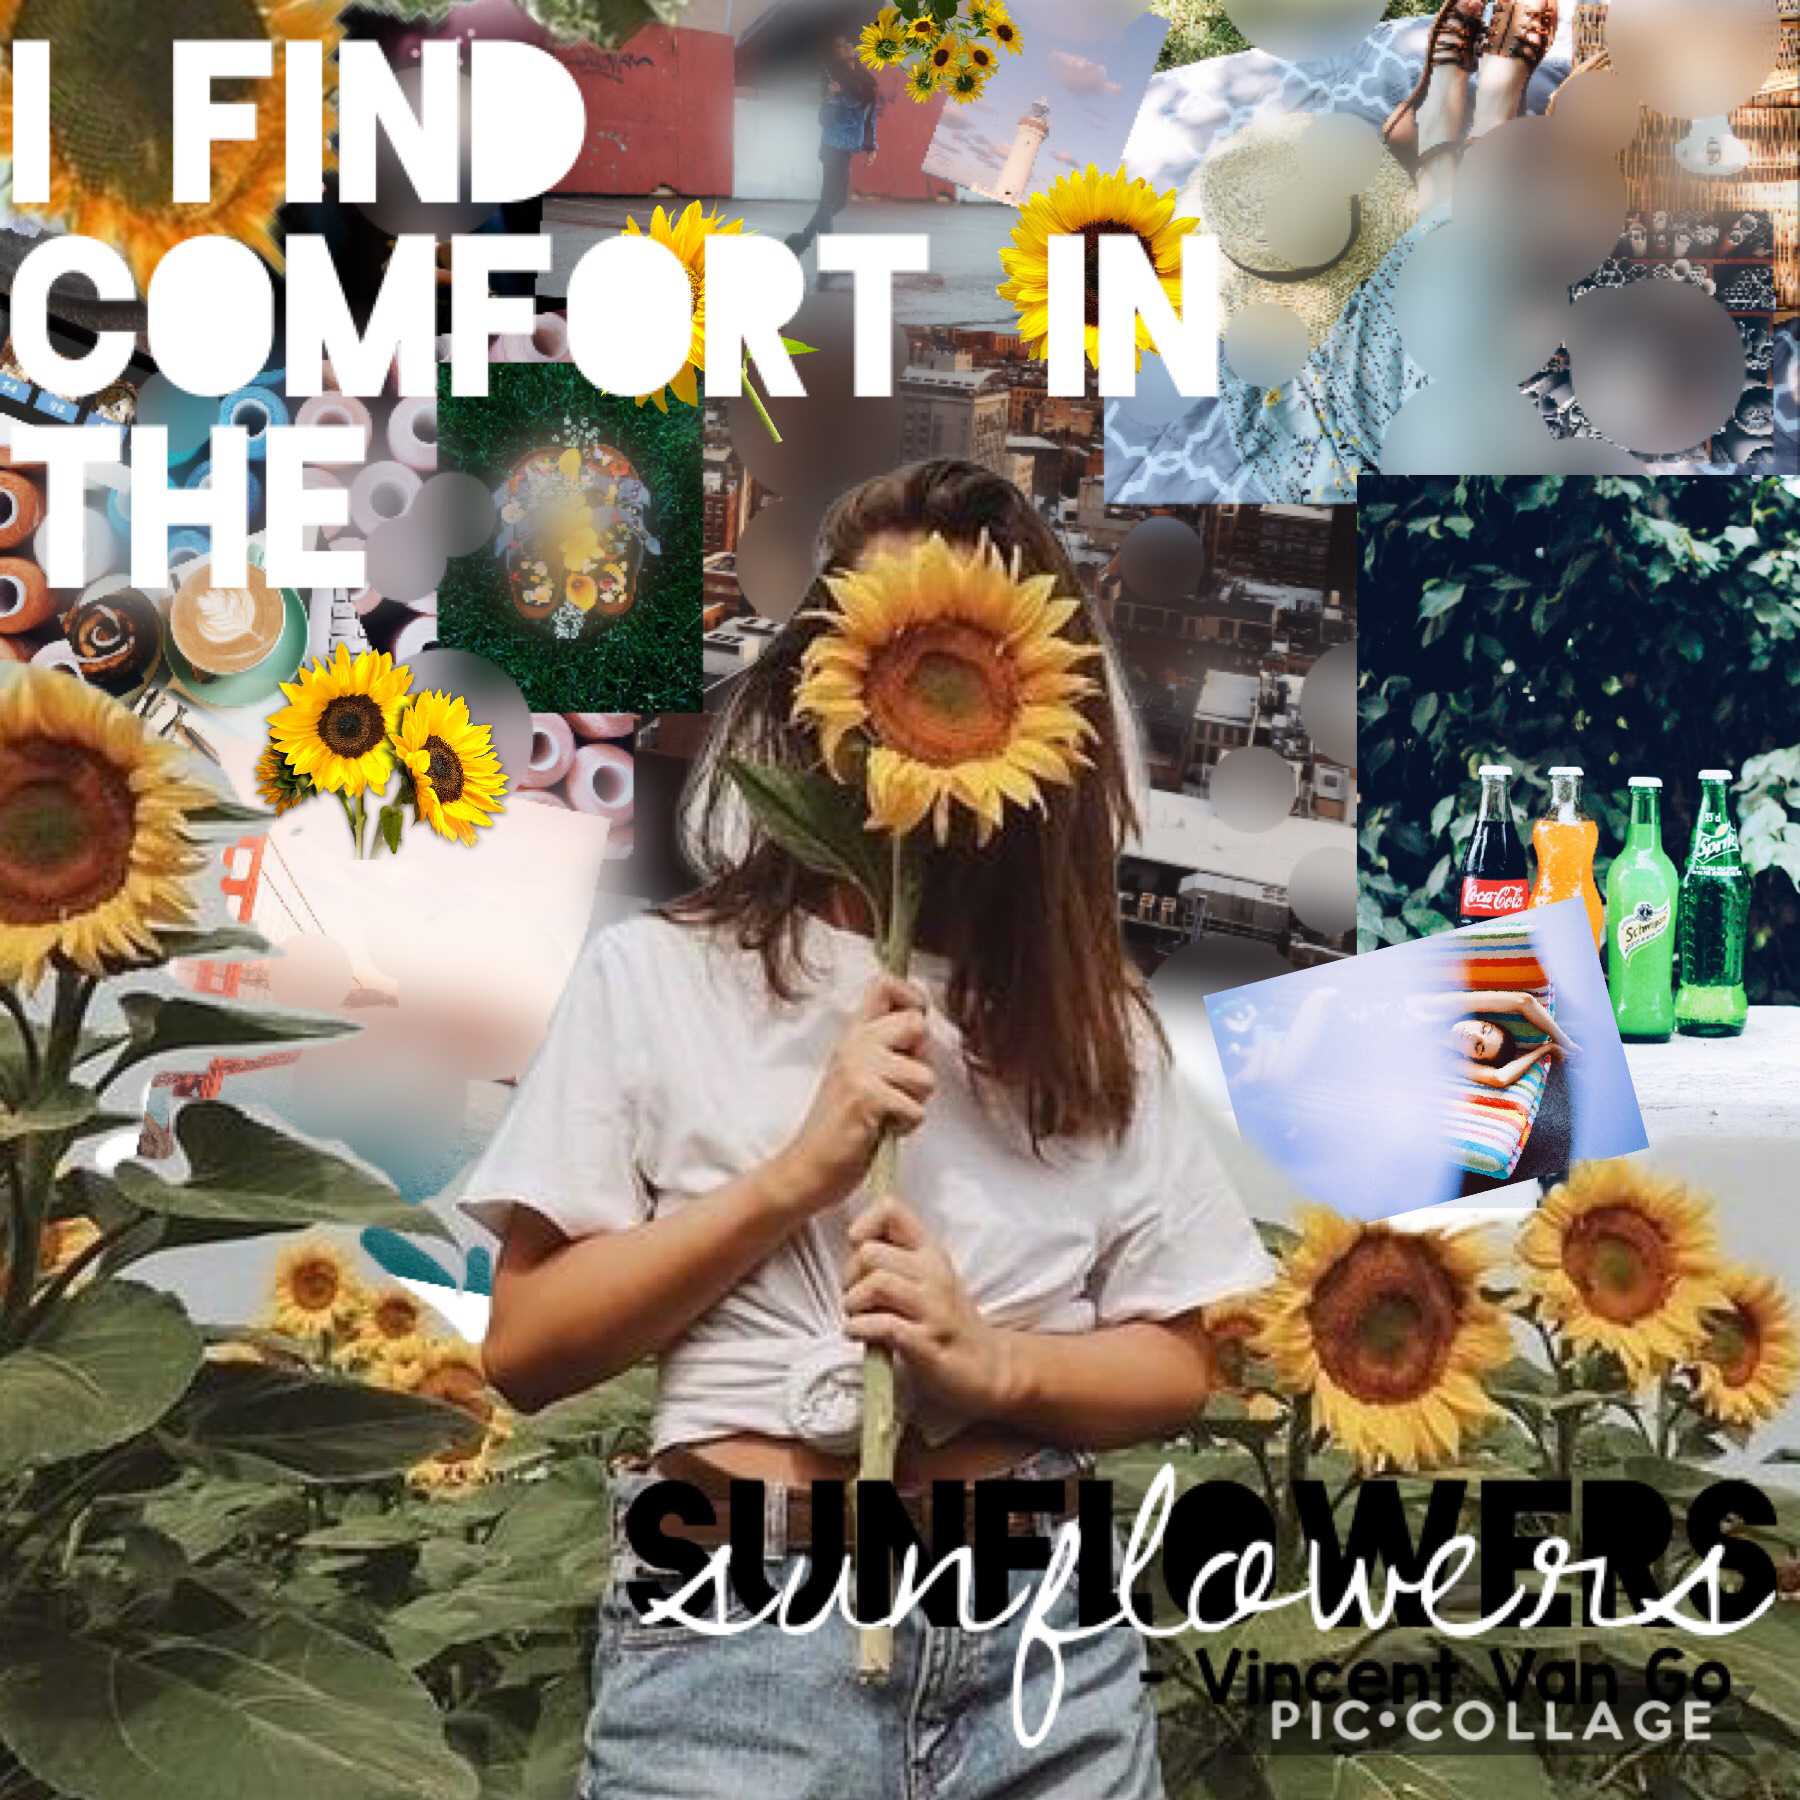 Summer=Sunflowers lol